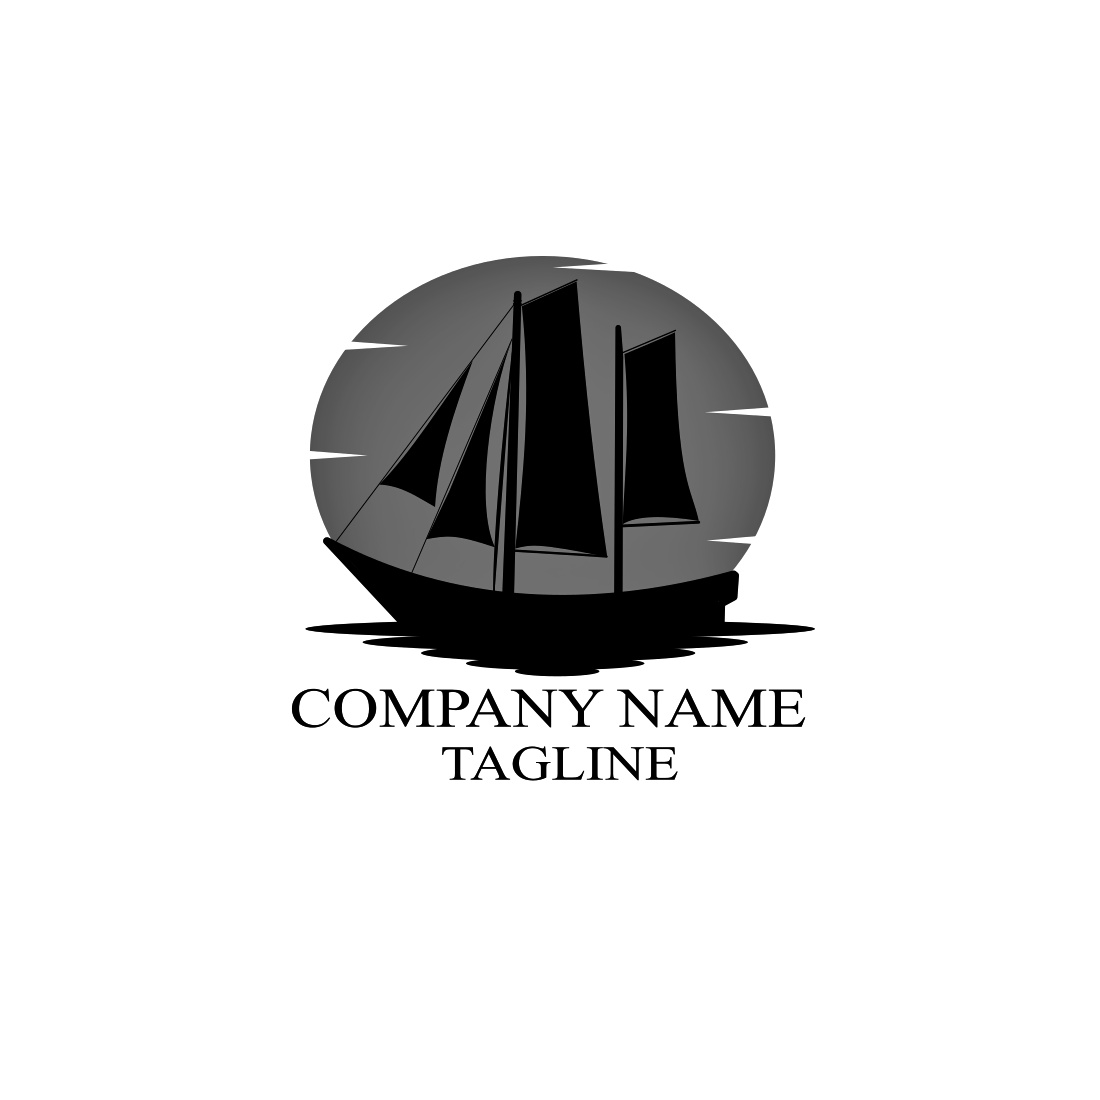 Boat Travel Logo Design cover image.